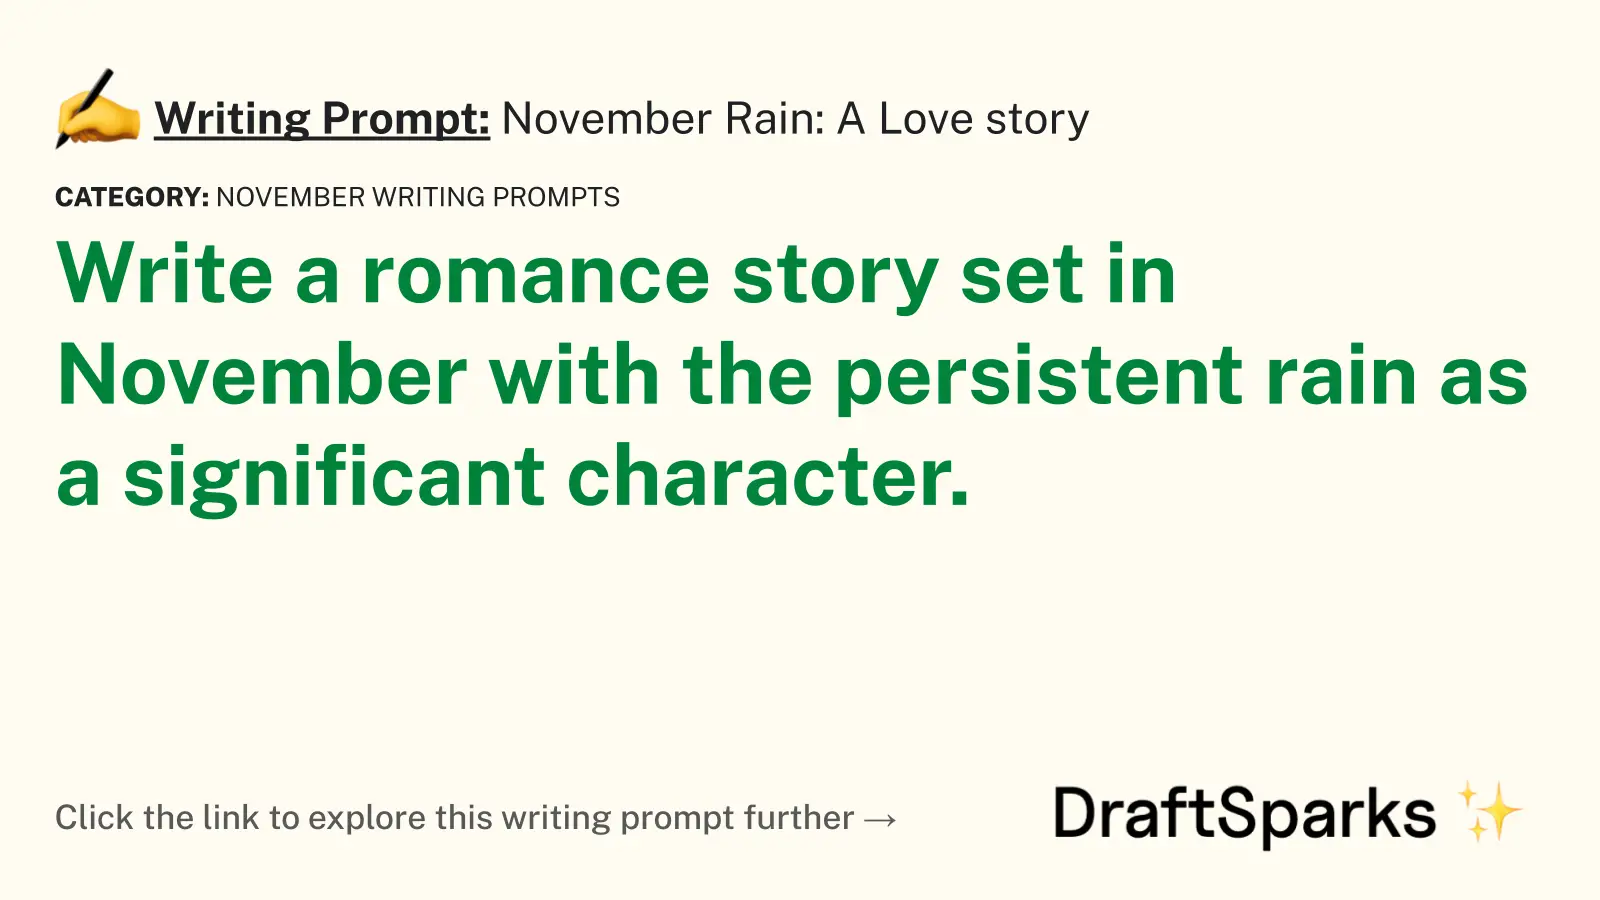 November Rain: A Love story